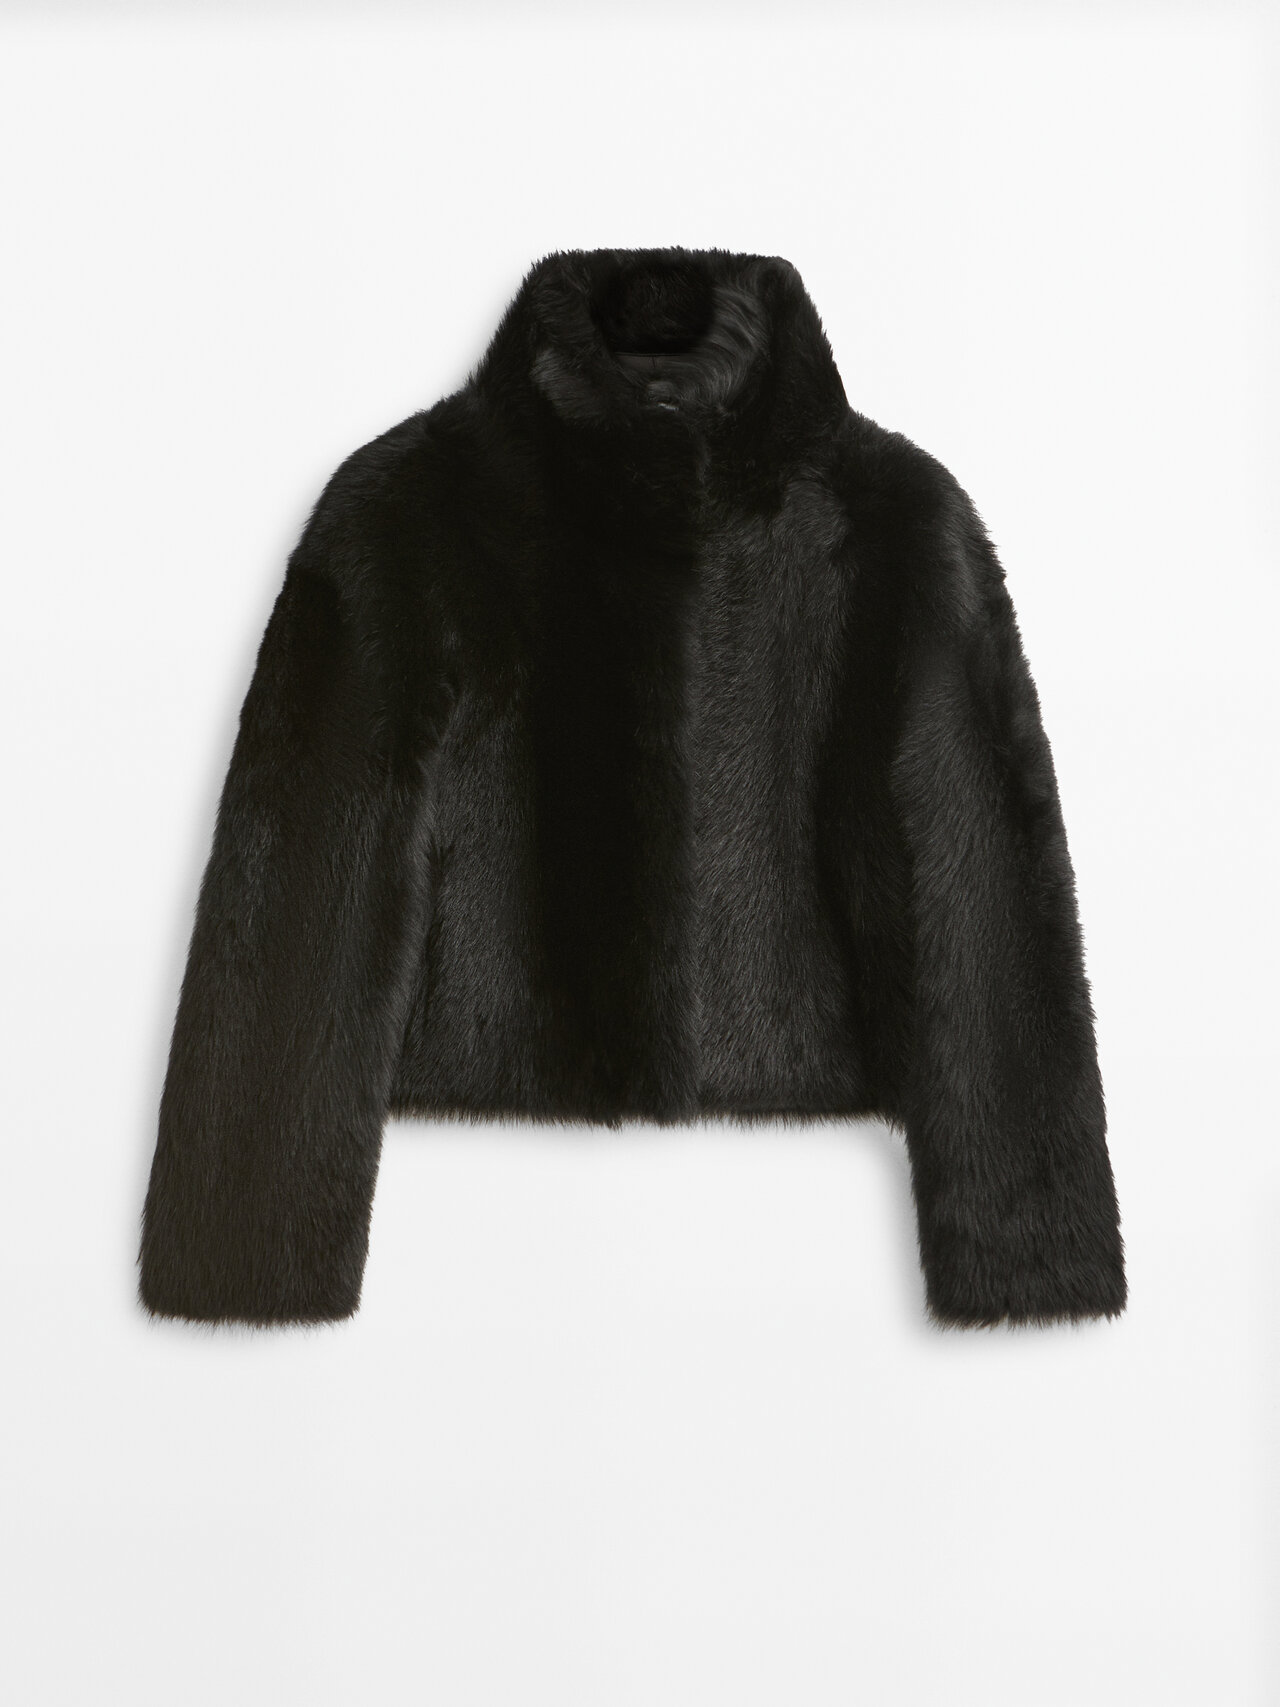 Massimo Dutti Black Leather Mouton Jacket